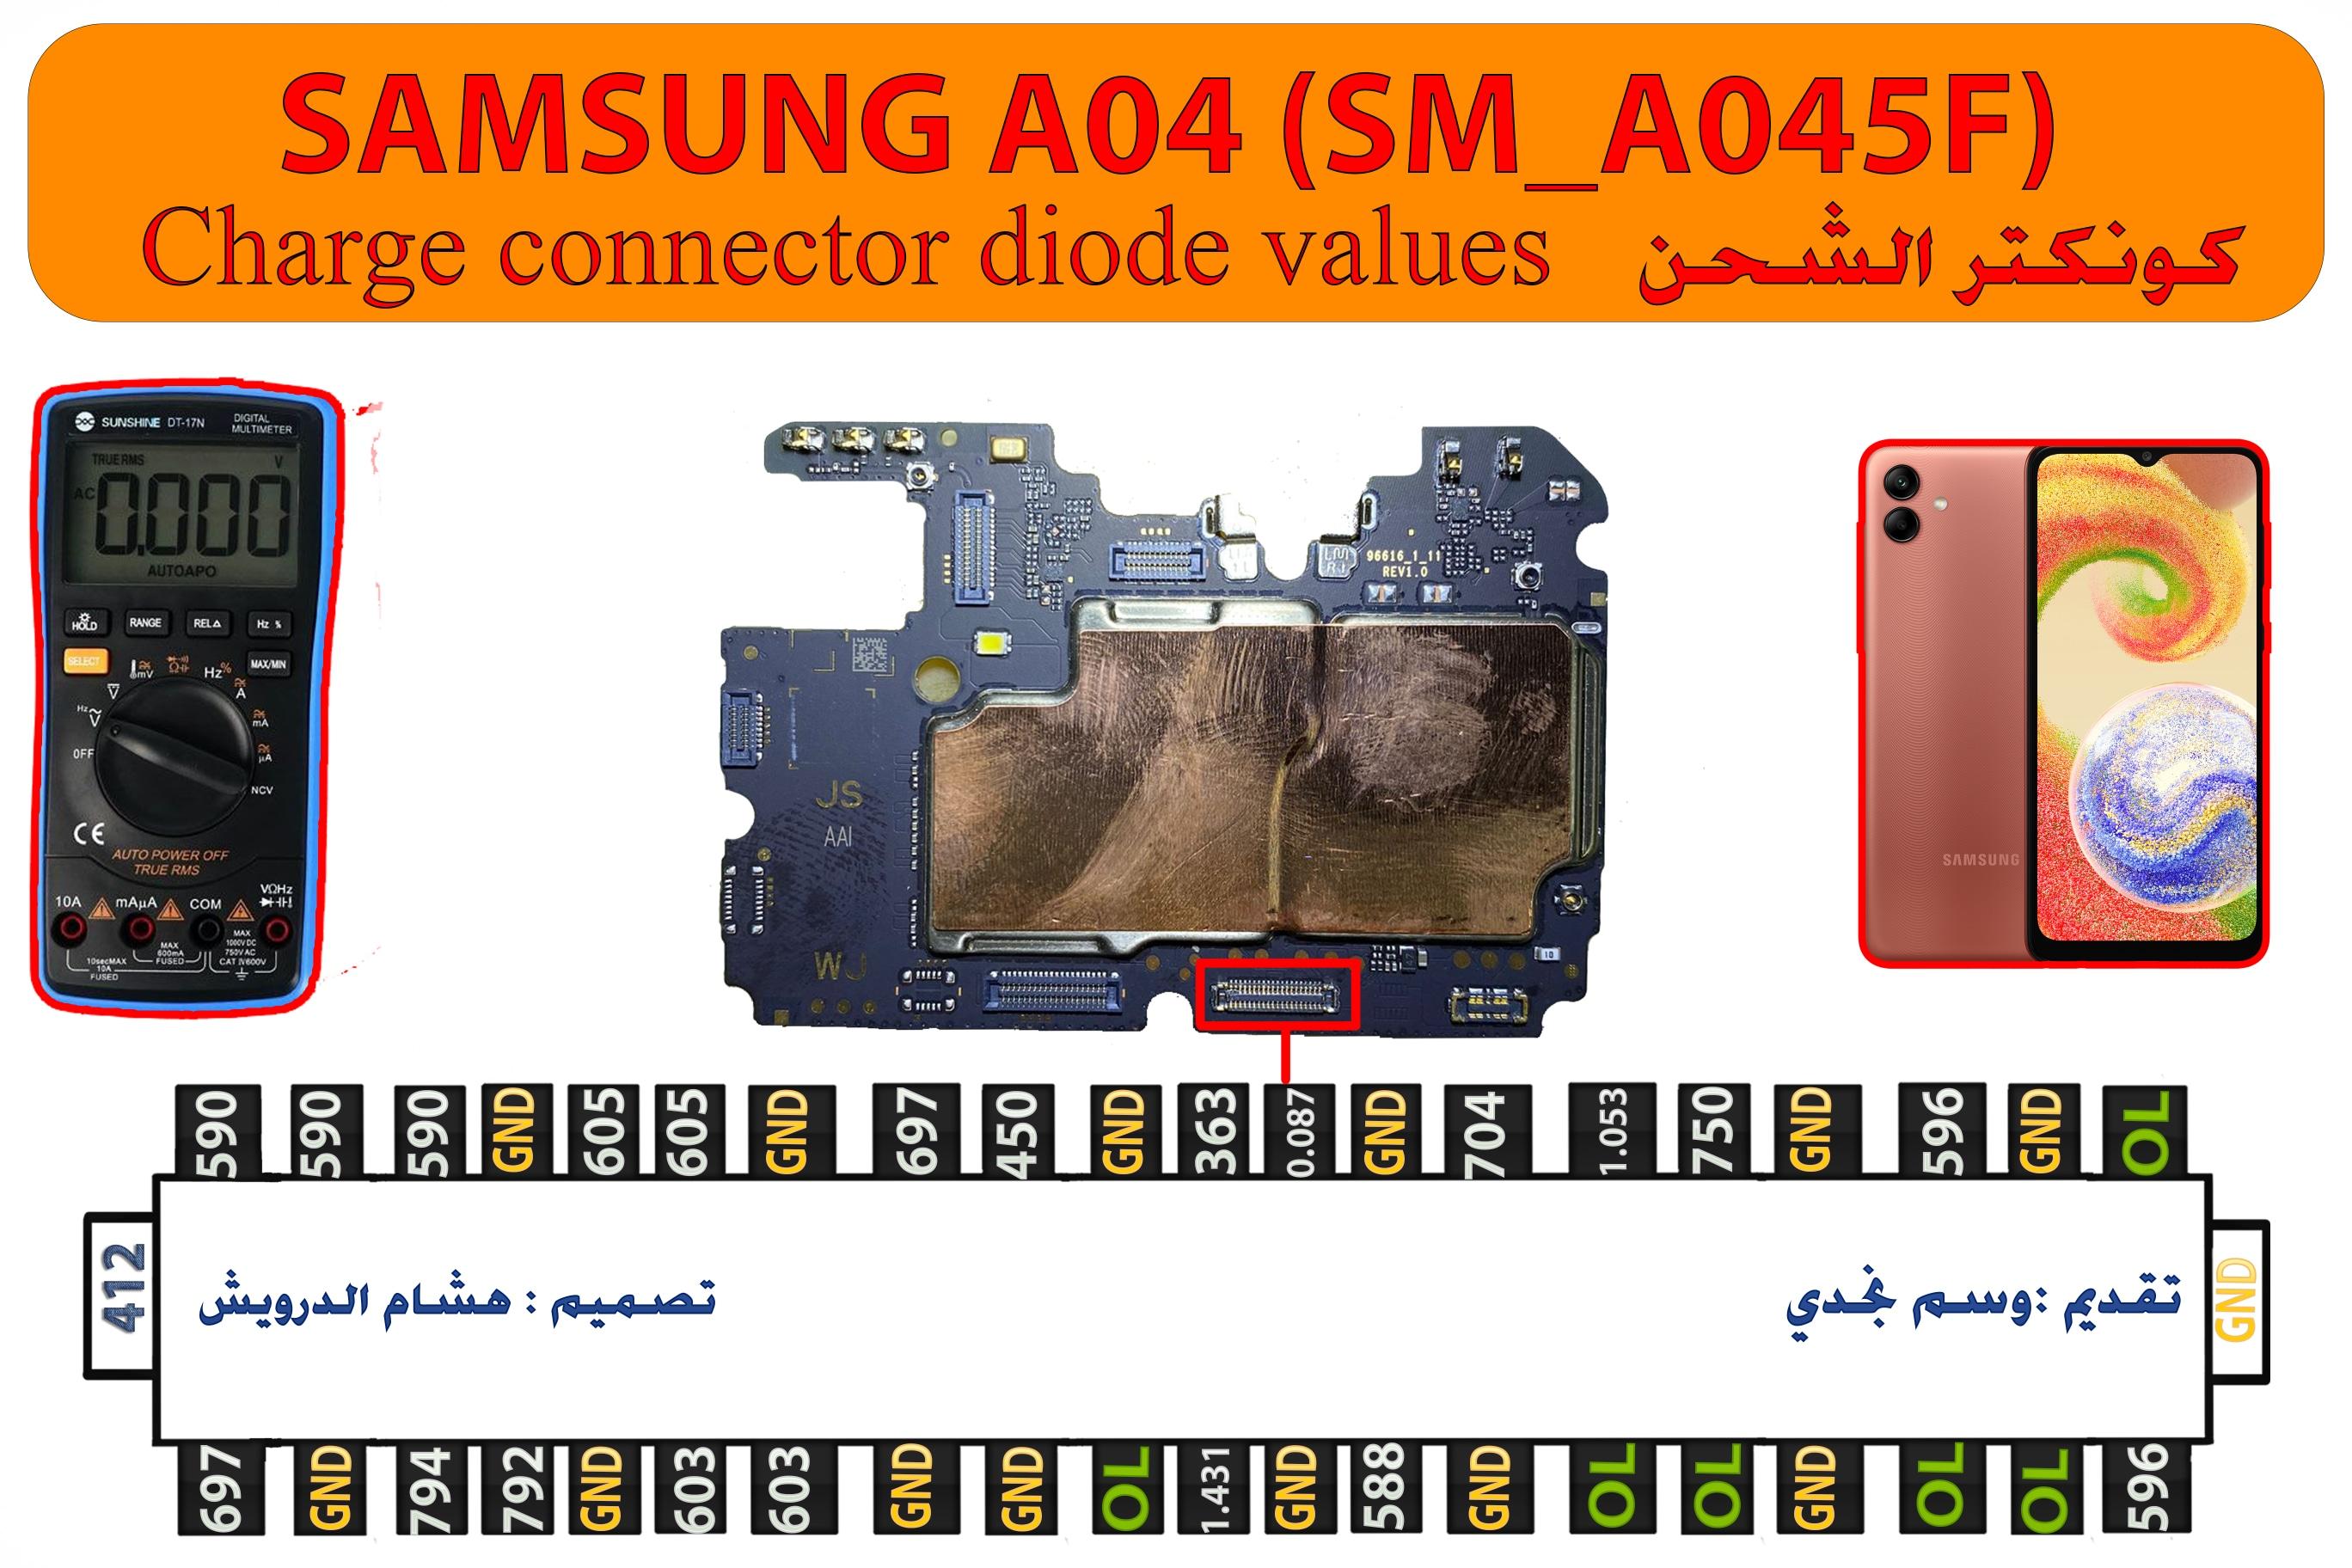 SamsungA04A045FChargeconnectordiodevalues.png.0a9ca16c163778a7780376f8cf4c0c65.png